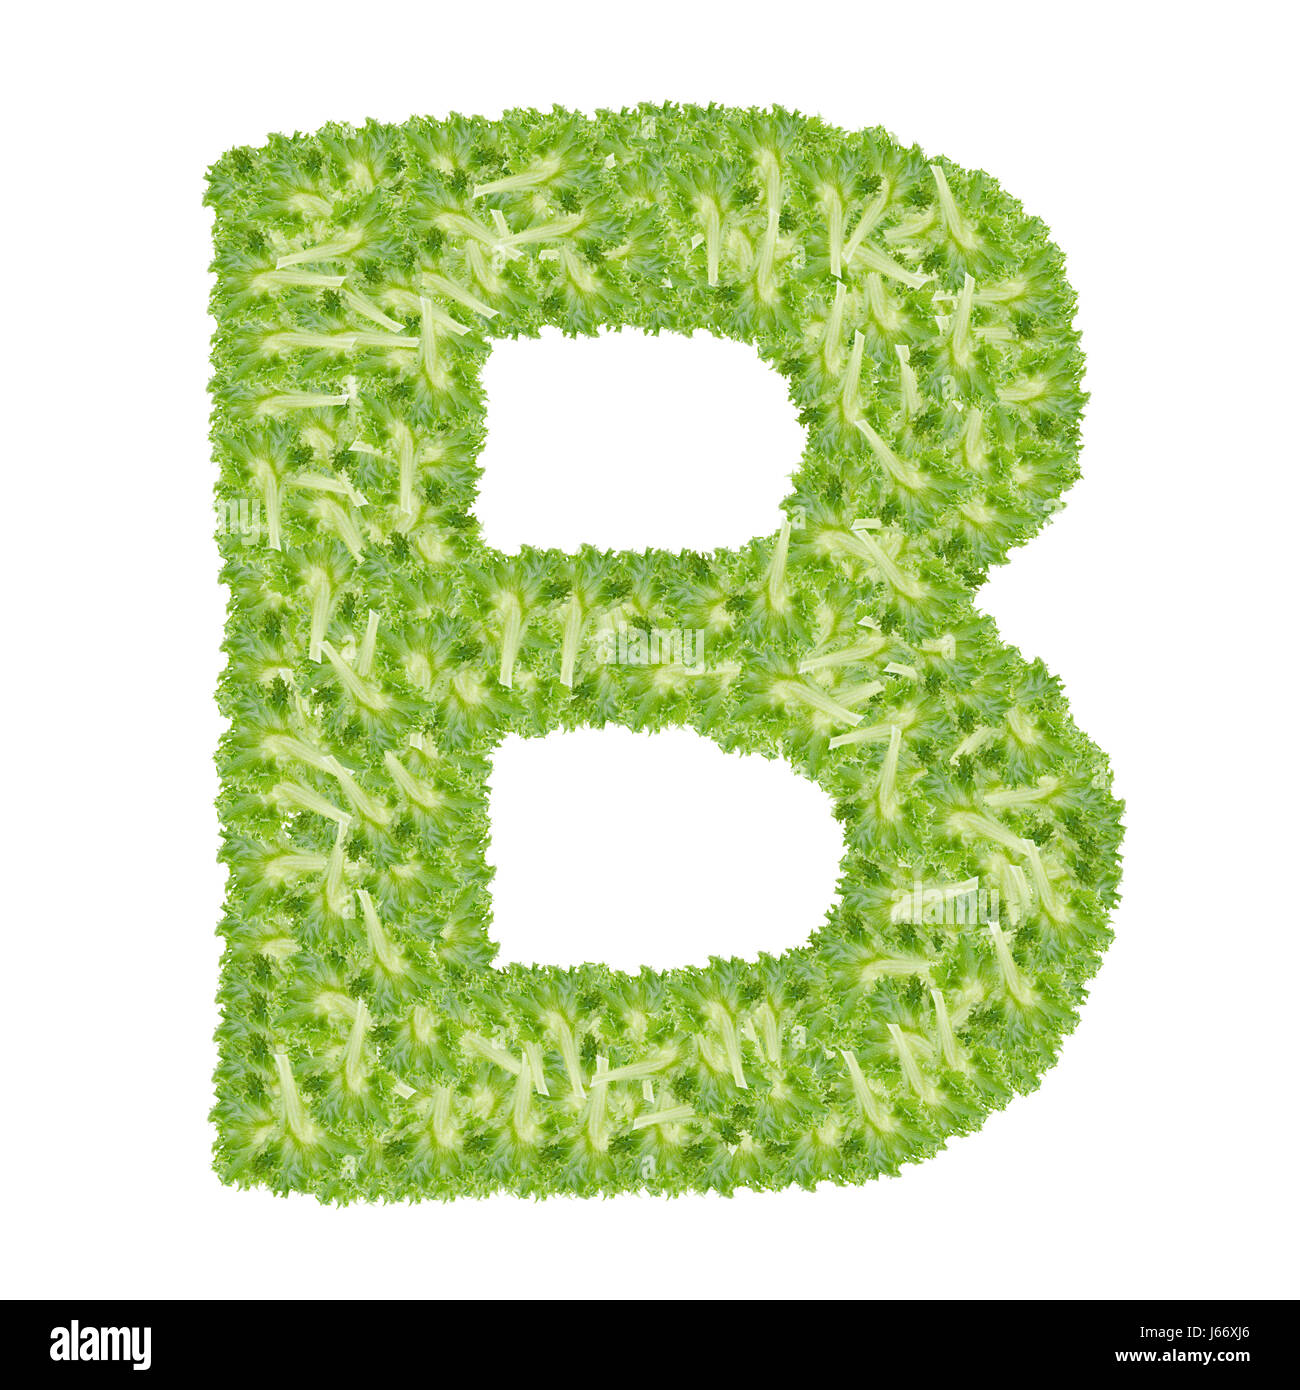 https://c8.alamy.com/comp/J66XJ6/letter-b-alphabet-with-hydroponics-leaf-abc-concept-type-as-logo-isolated-J66XJ6.jpg